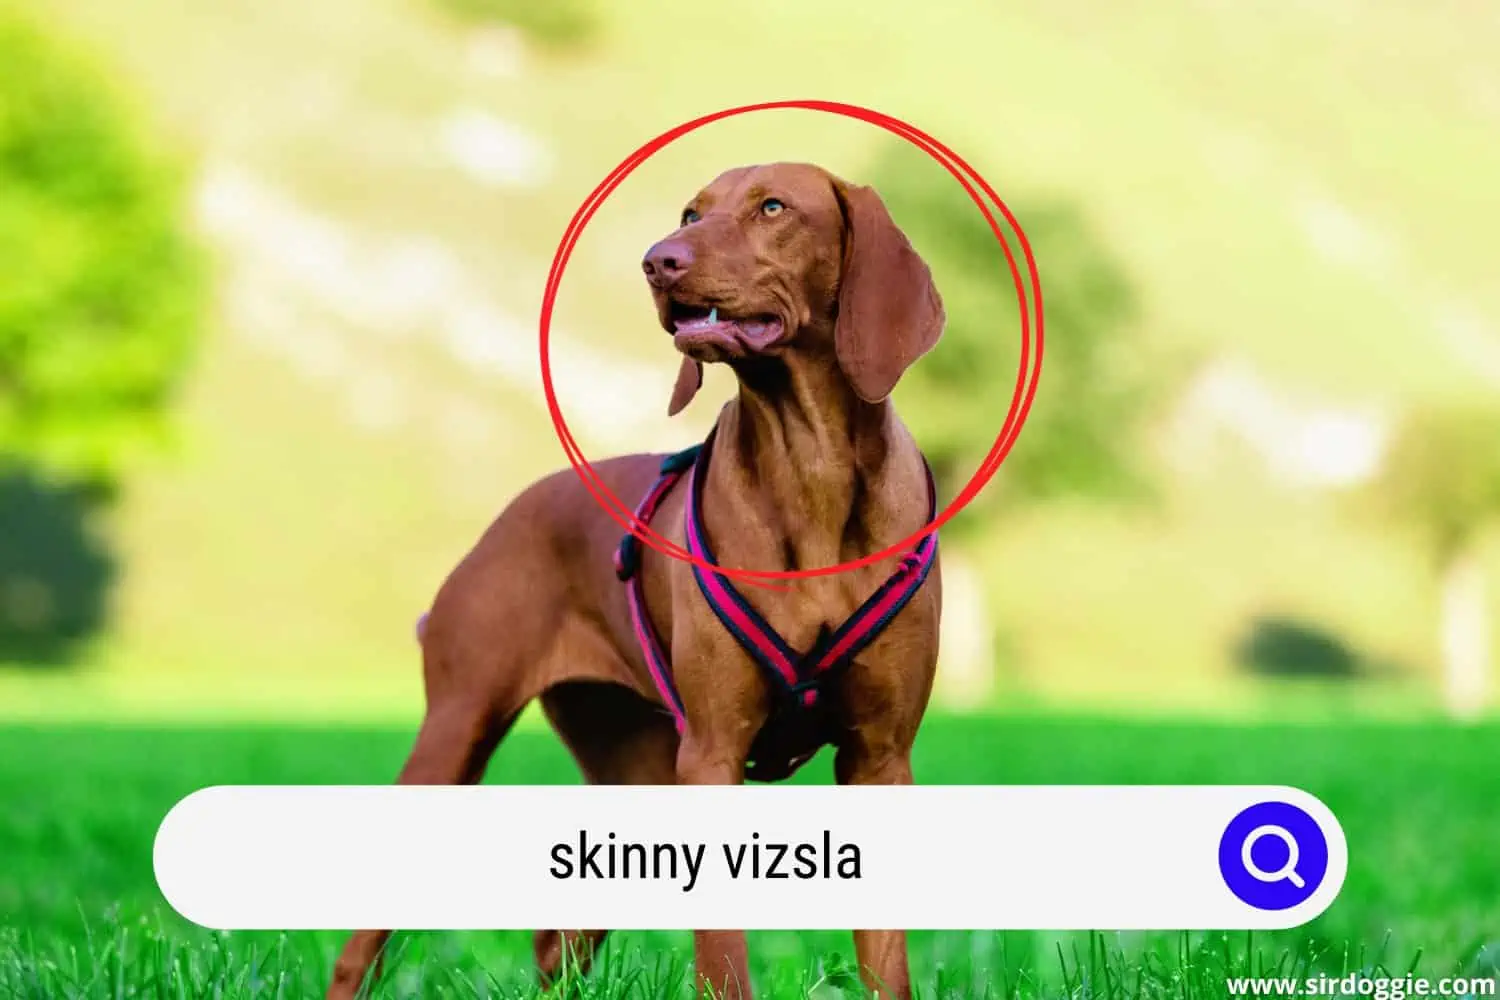 skinny vizsla dog